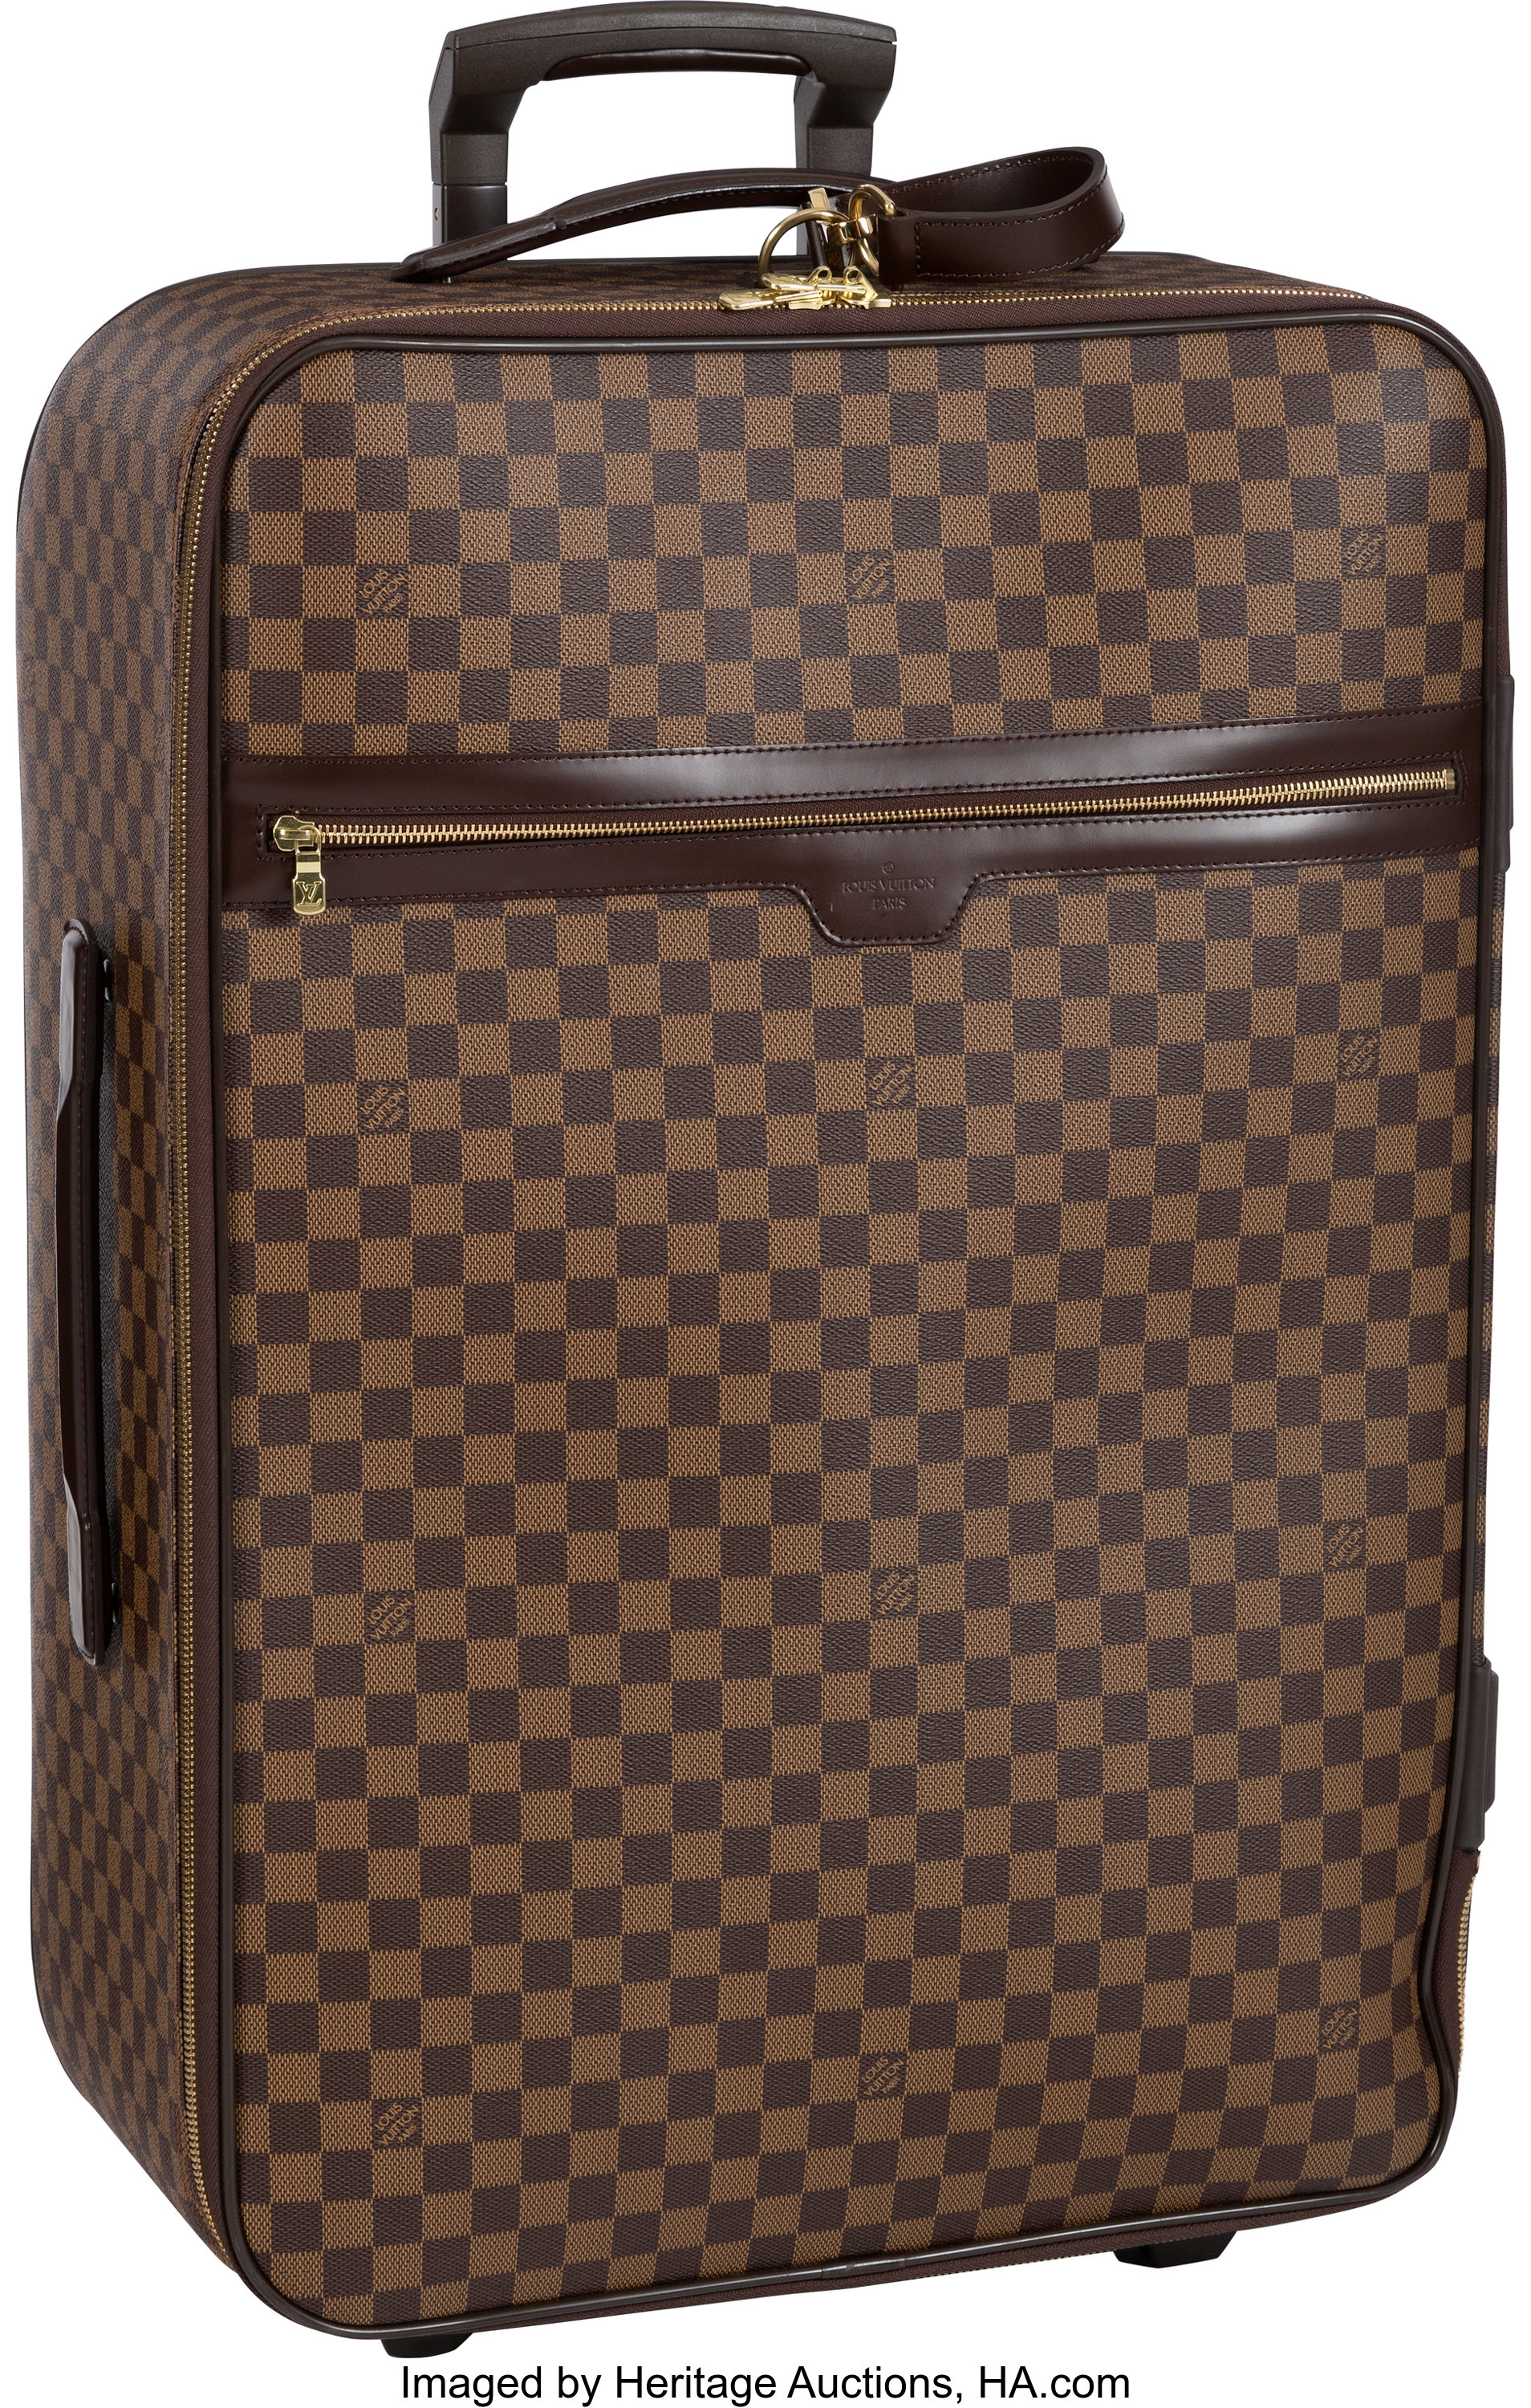 Sold at Auction: Louis Vuitton Damier Ebene Briefcase